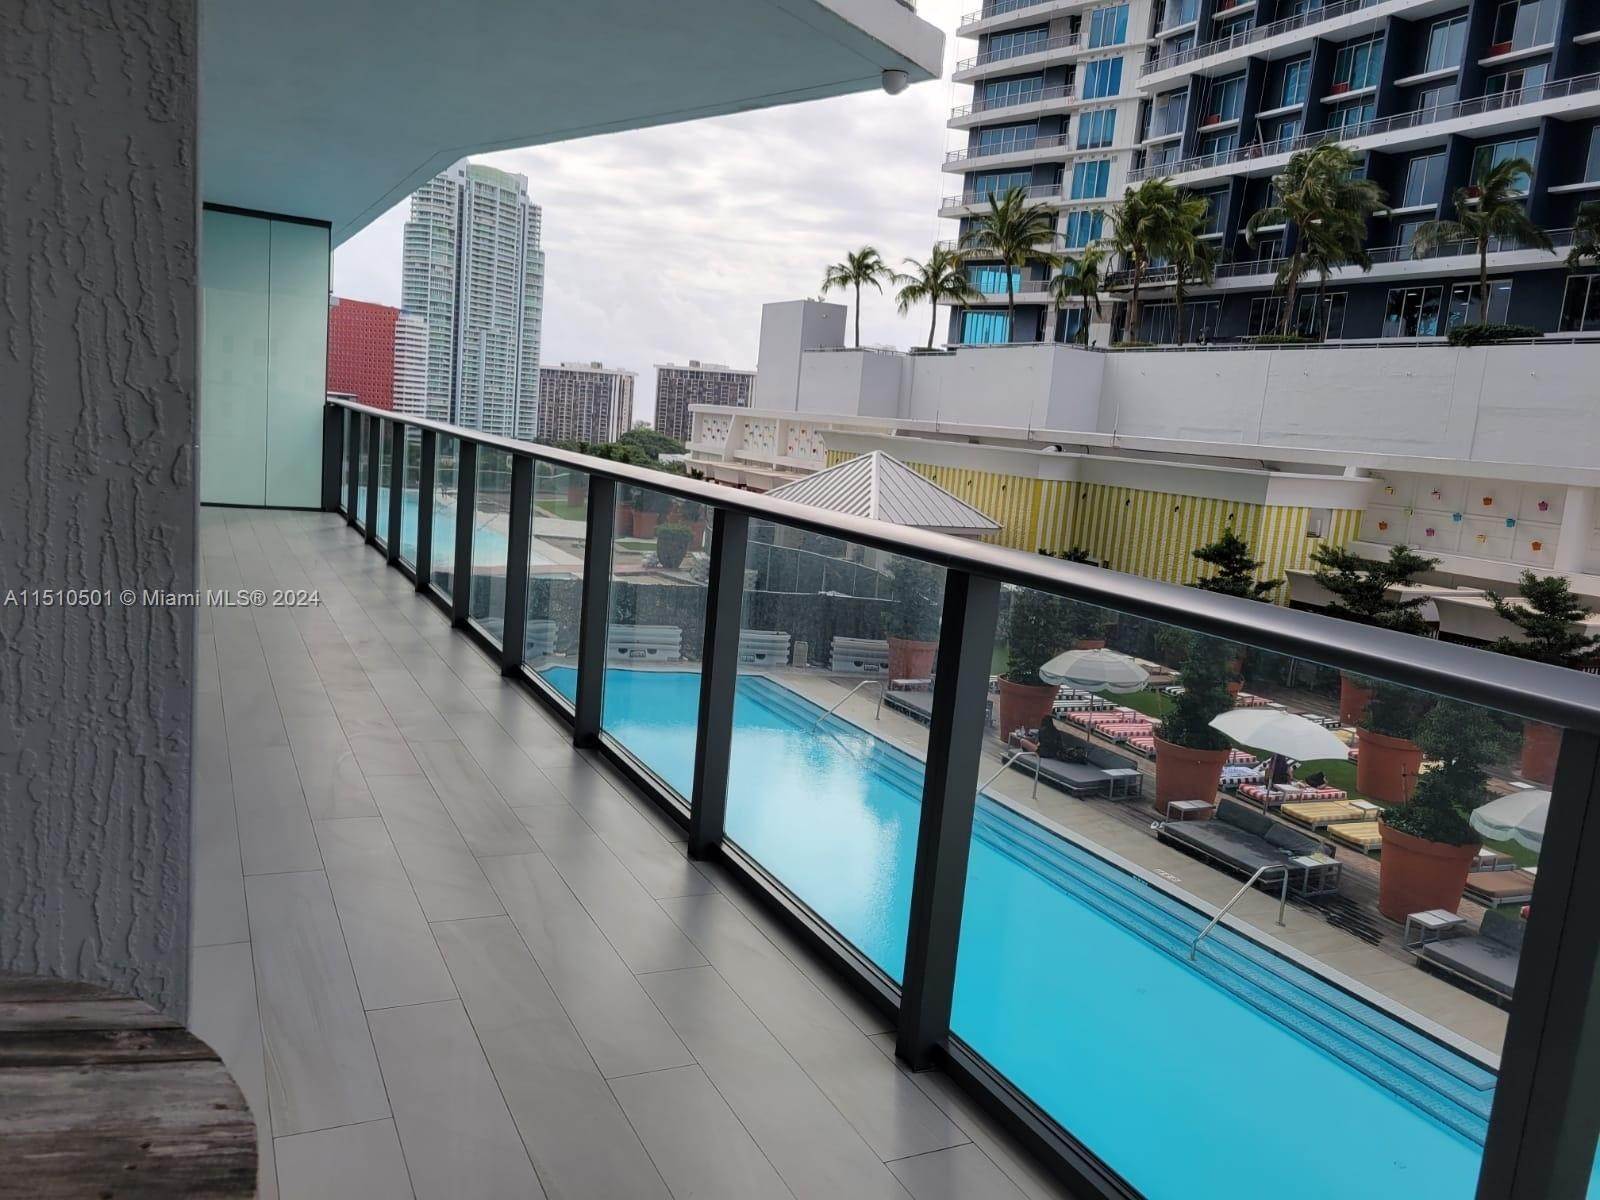 Condominium for Sale at Brickell, Miami, FL 33130